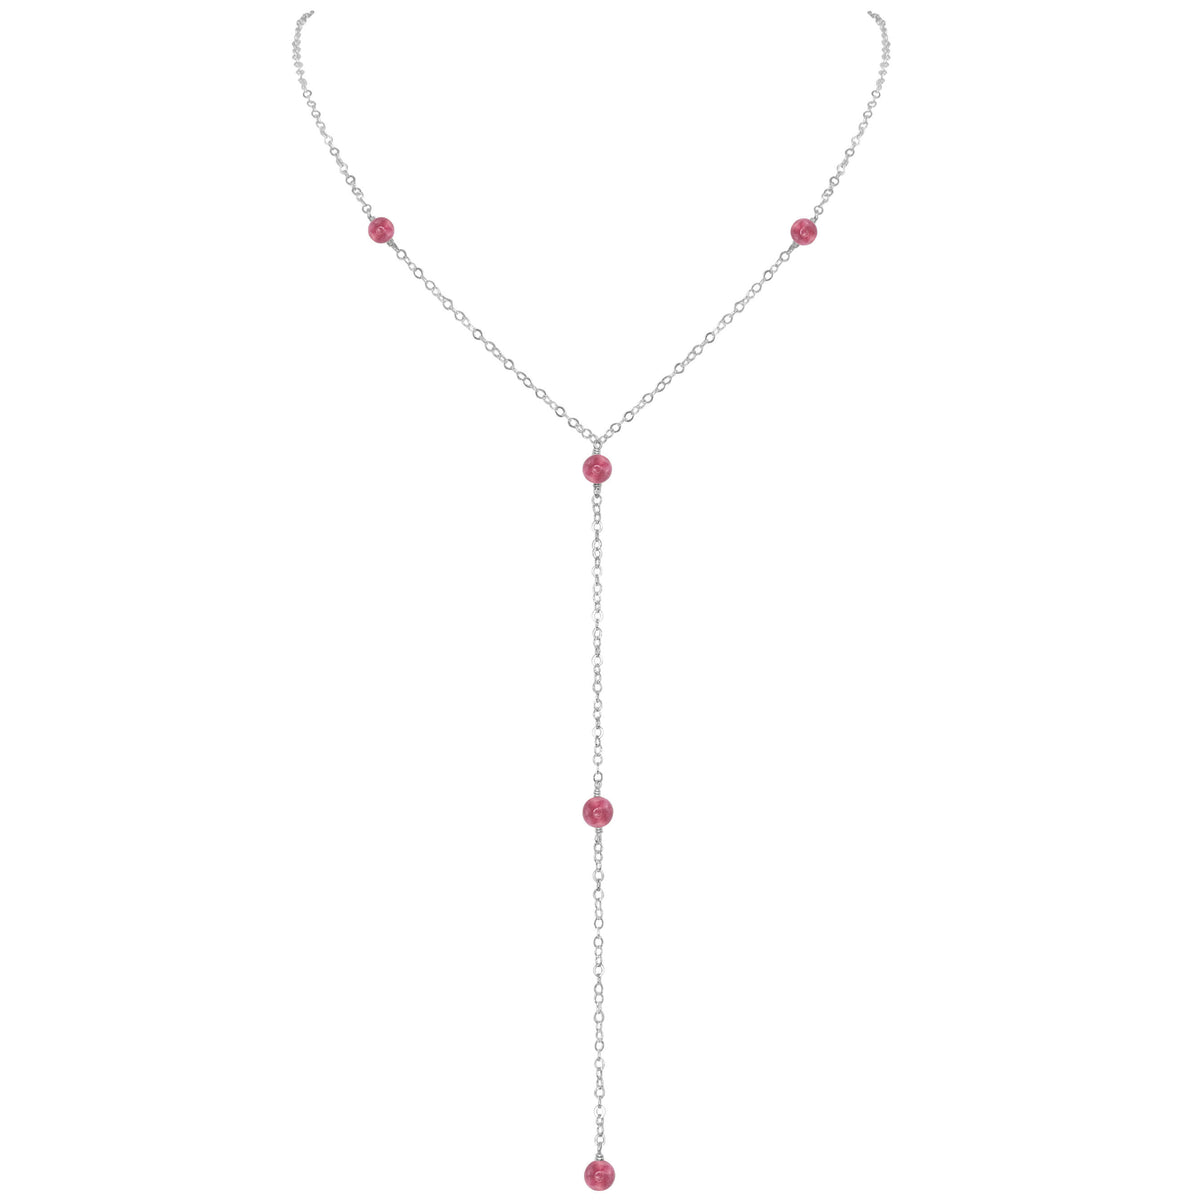 Dainty Y Necklace - Pink Tourmaline - Sterling Silver - Luna Tide Handmade Jewellery